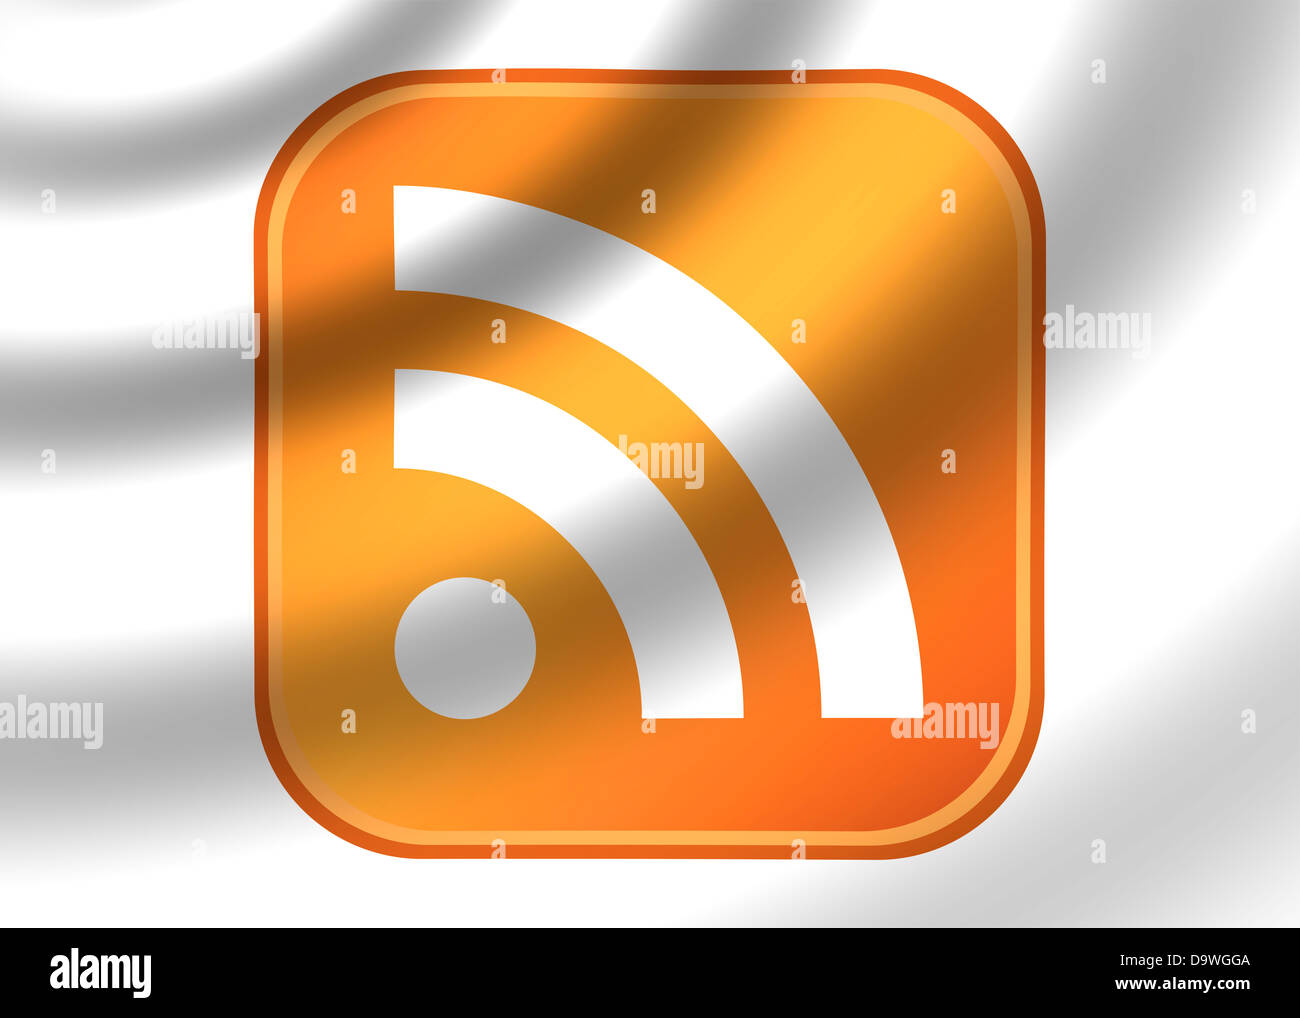 RSS / Really Simple Syndication logo icon symbol flag Stock Photo